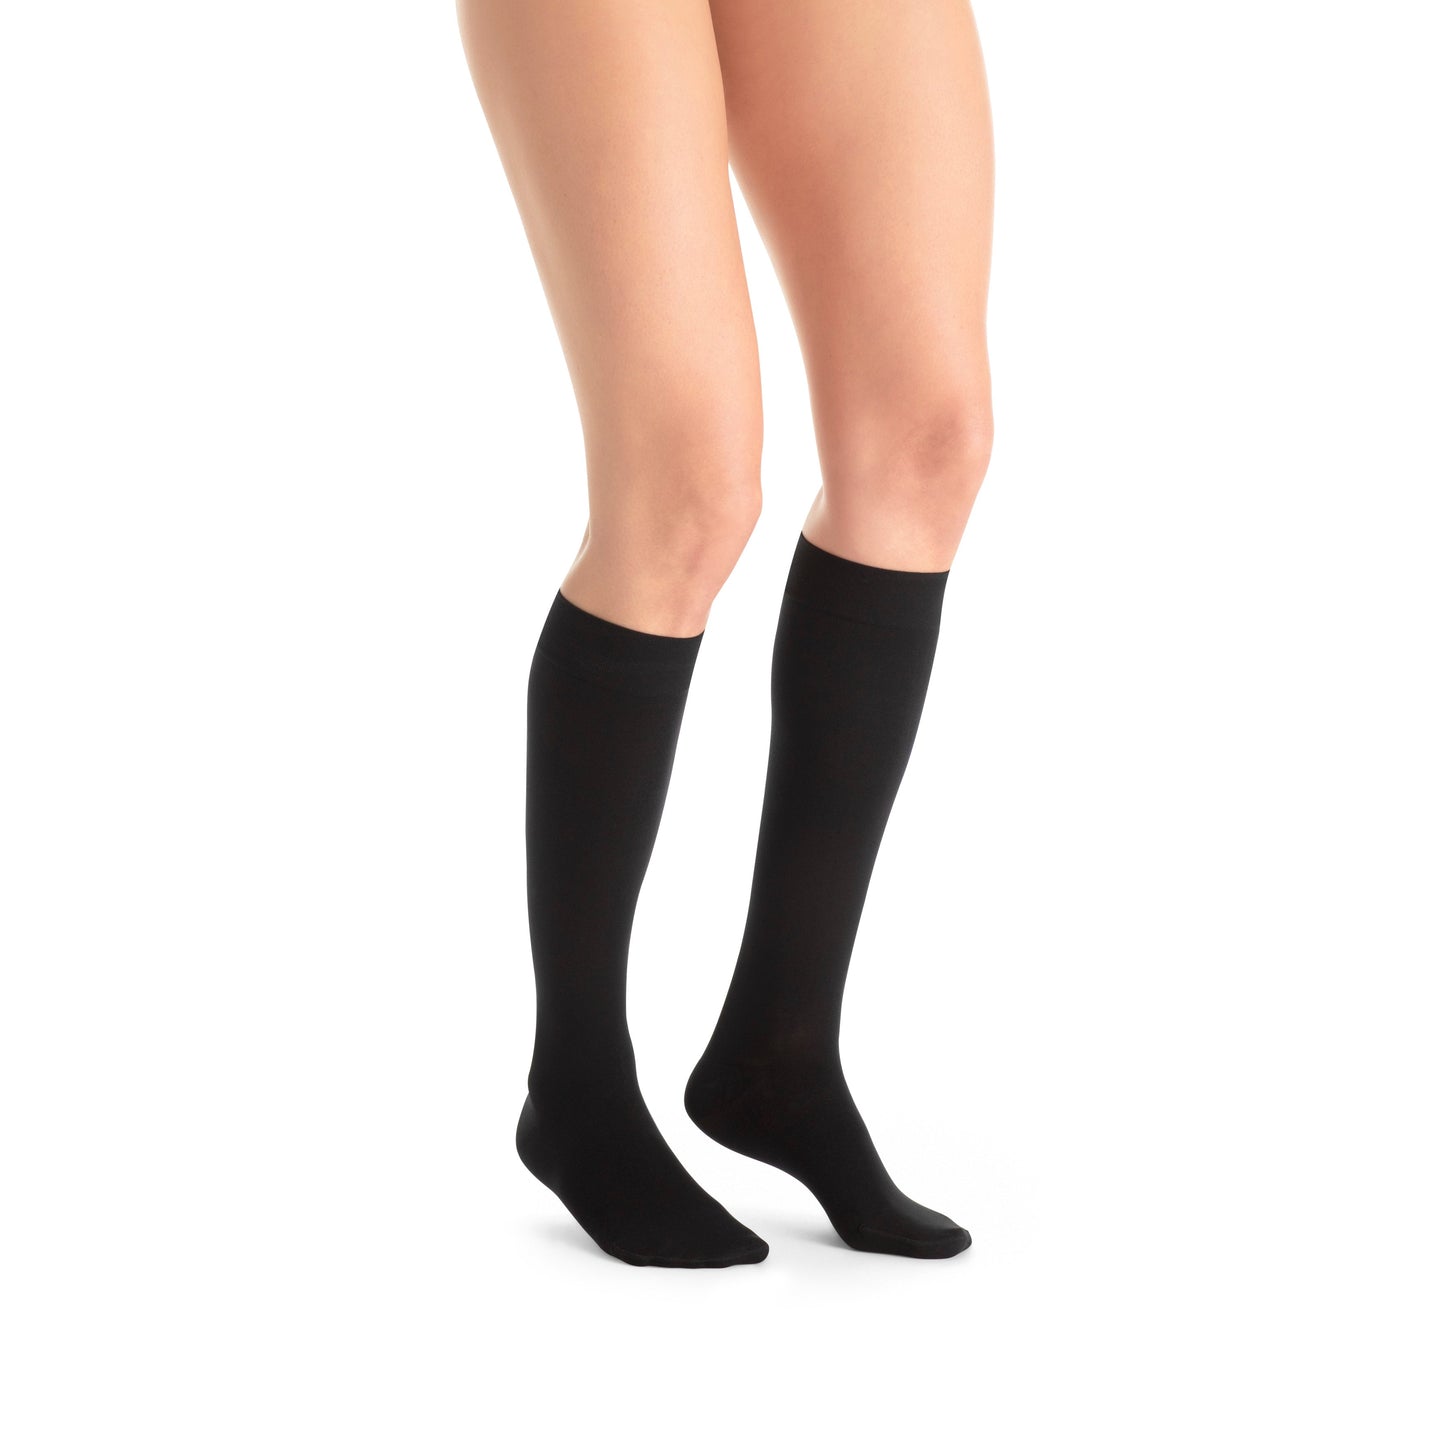 JOBST UltraSheer Compression Stockings 15-20 mmHg Knee High Closed Toe